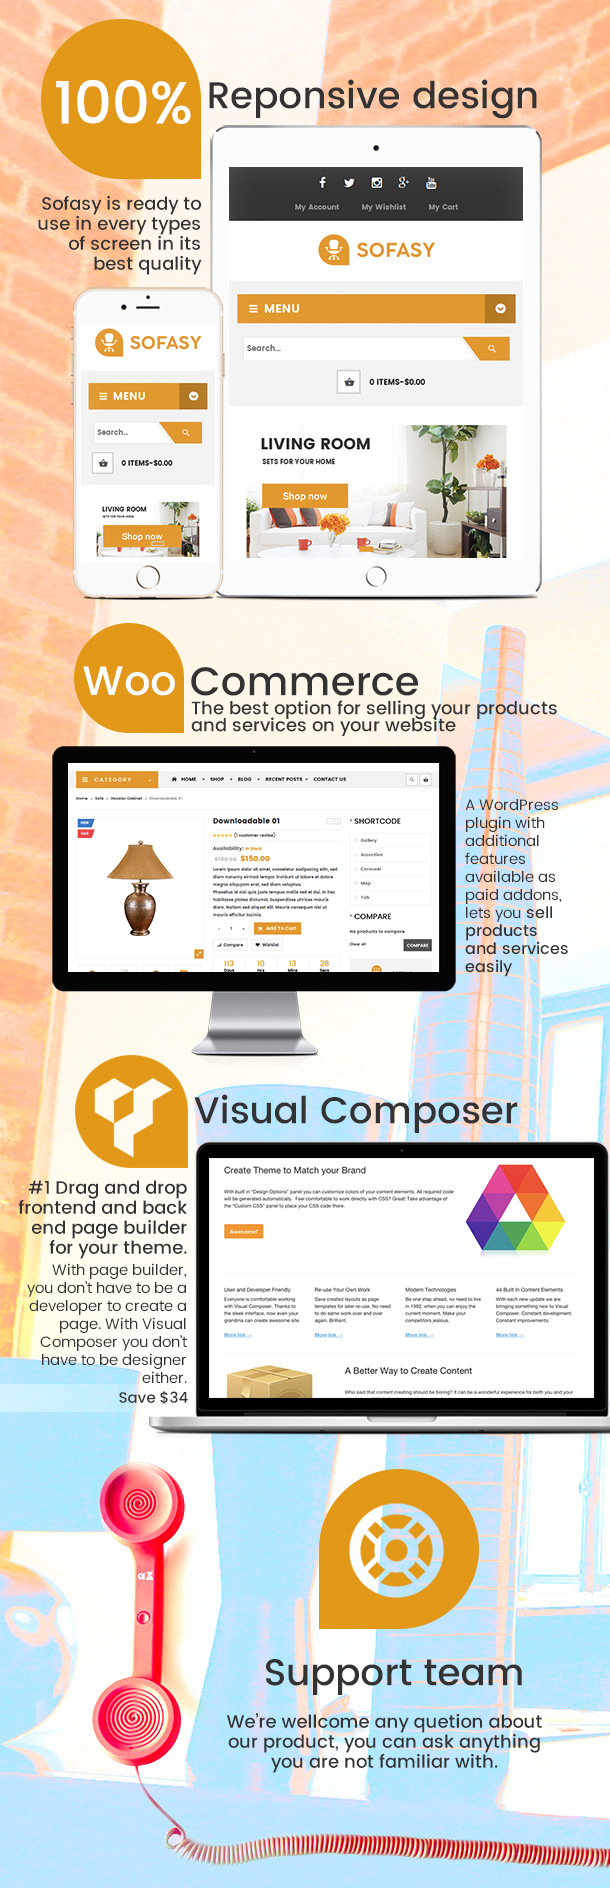 VG Sofasy - Responsive WooCommerce WordPress Theme - 20